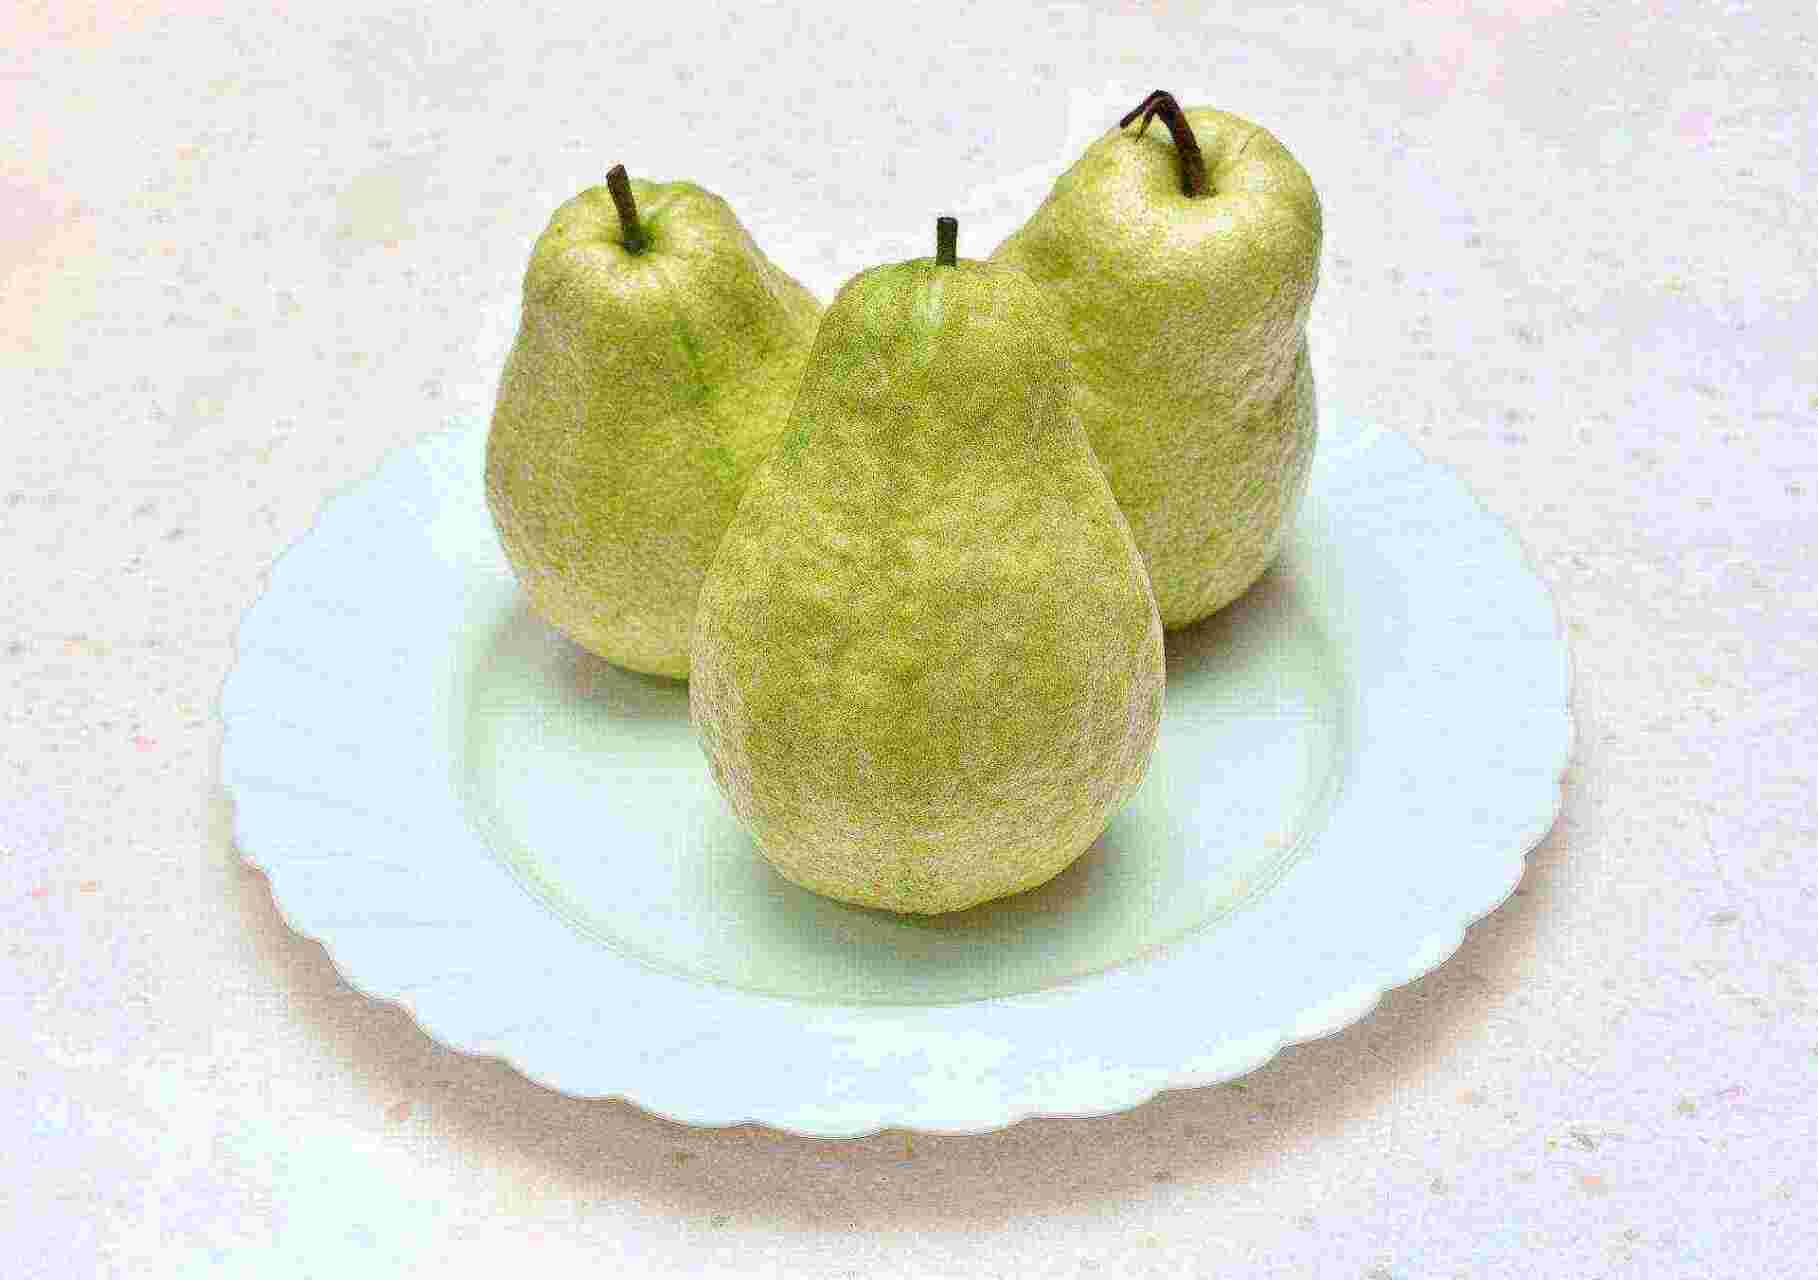 Photo of guava via pixabay